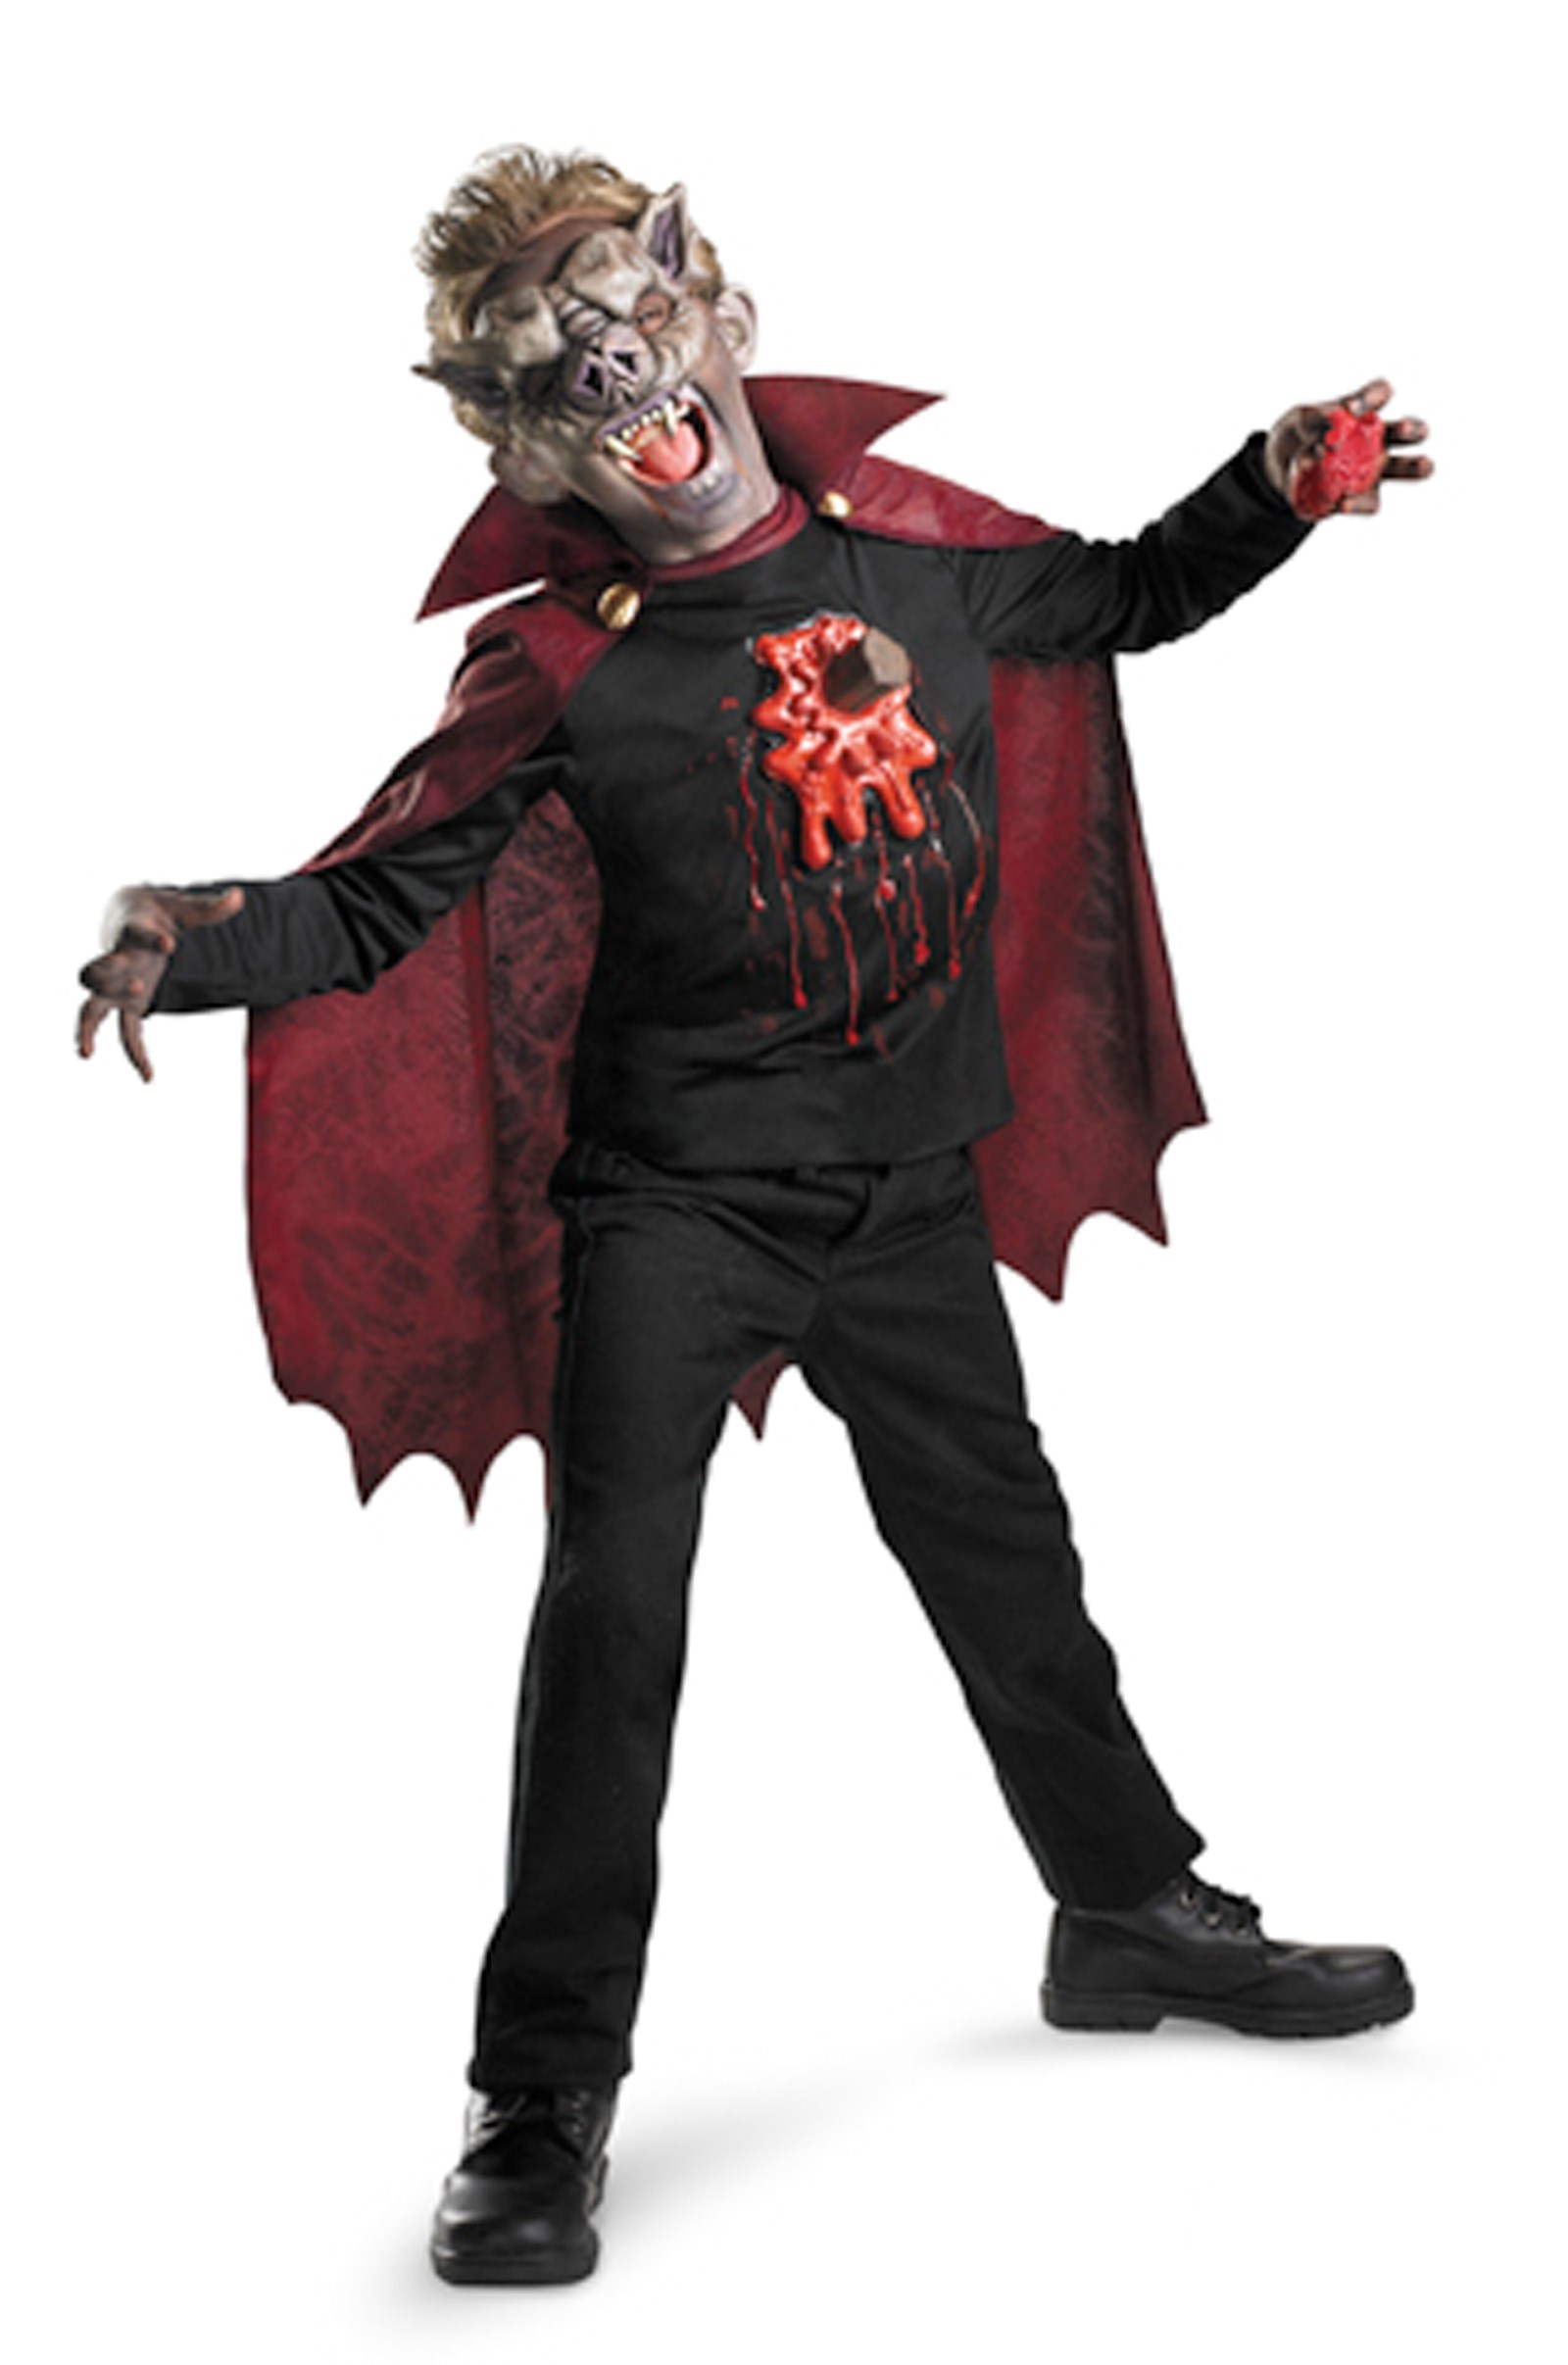 Blood Vamp Child Costume